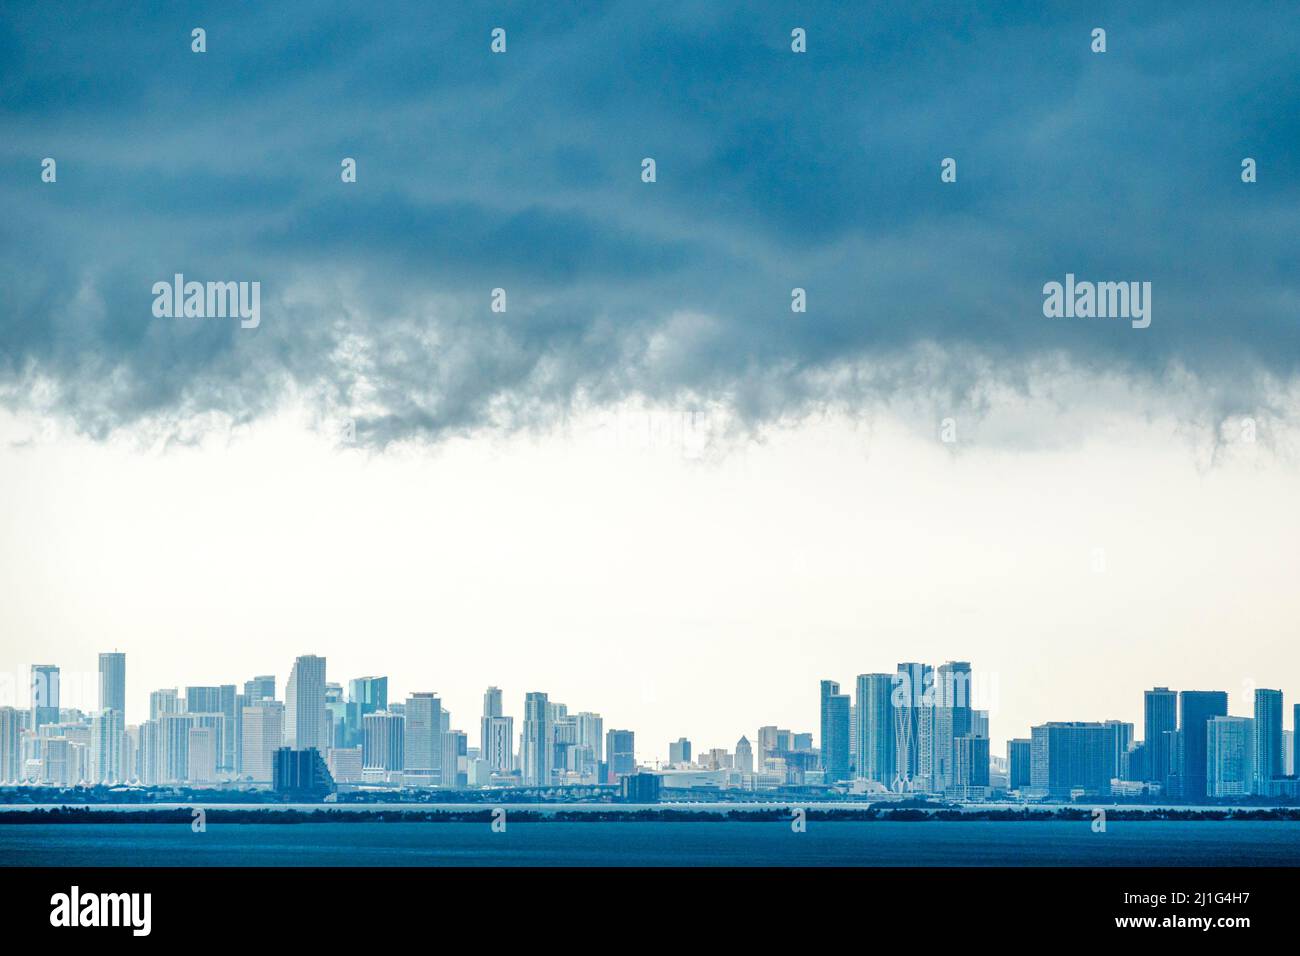 Miami Florida,downtown city skyline,tall skyscraper buildings,weather storm rain clouds,visitors travel traveling tour tourist tourism landmark landma Stock Photo